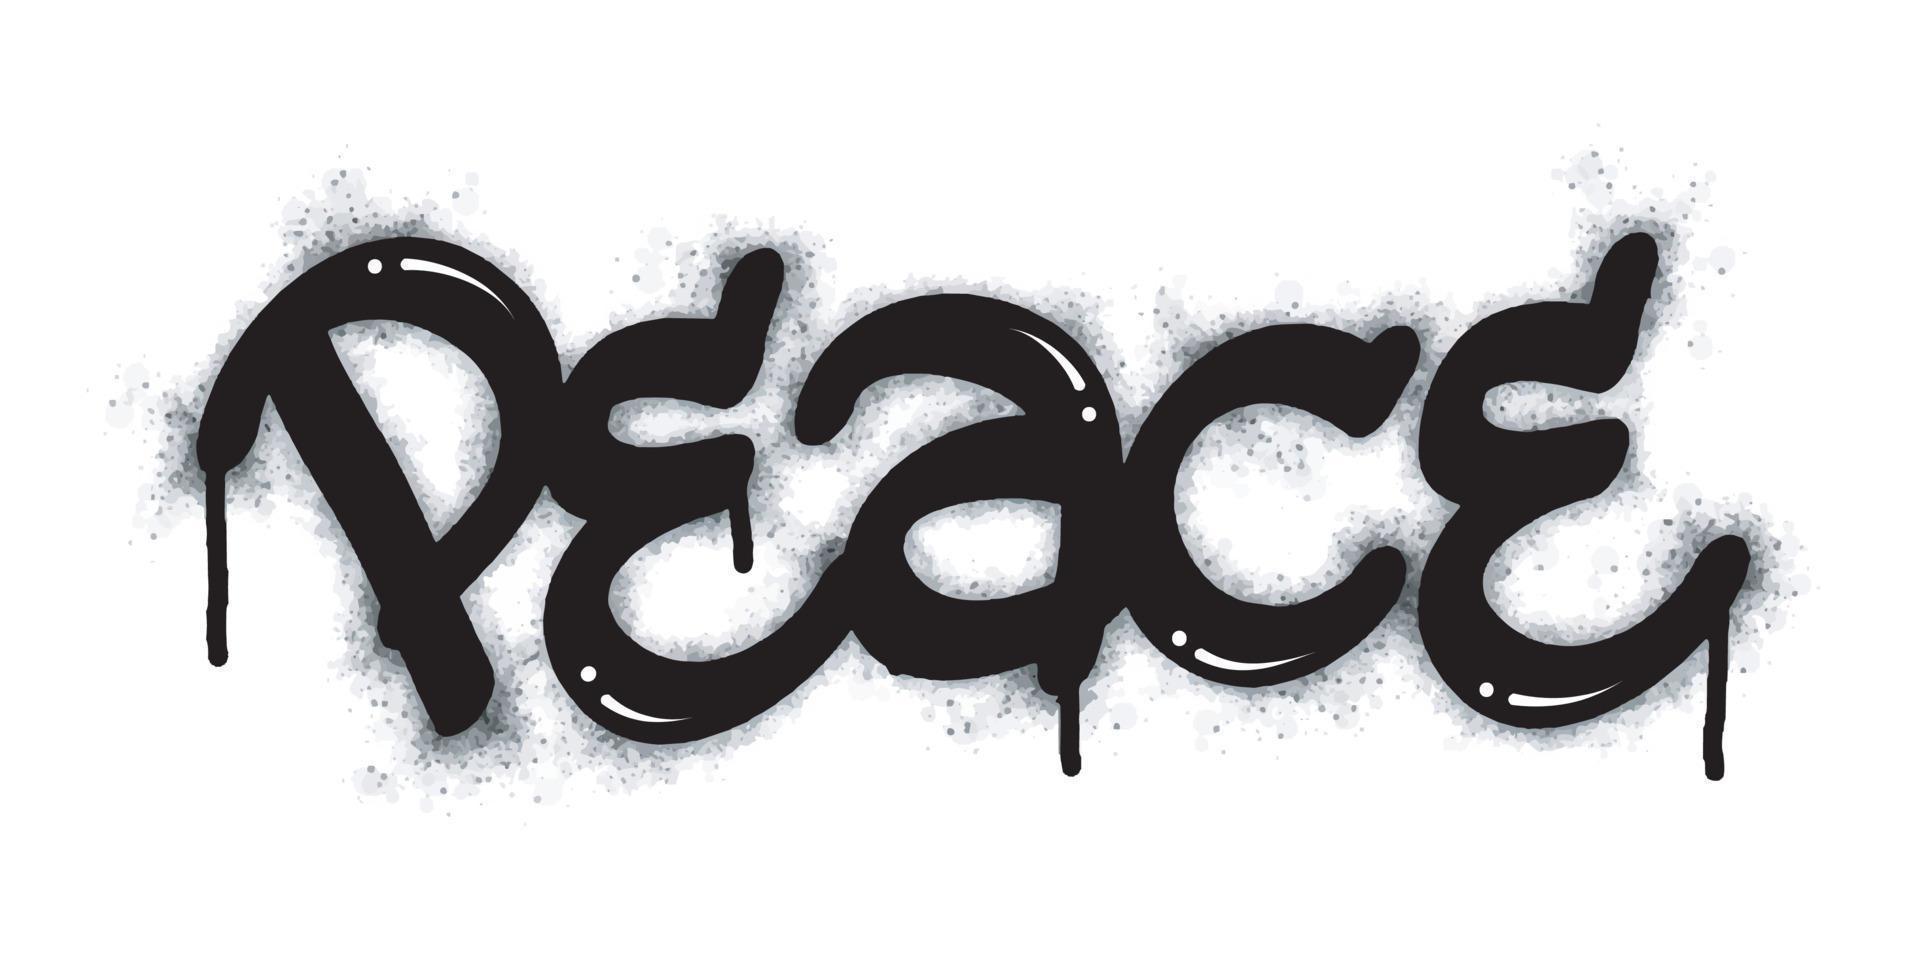 graffiti vrede woord en symbool gespoten in zwart vector